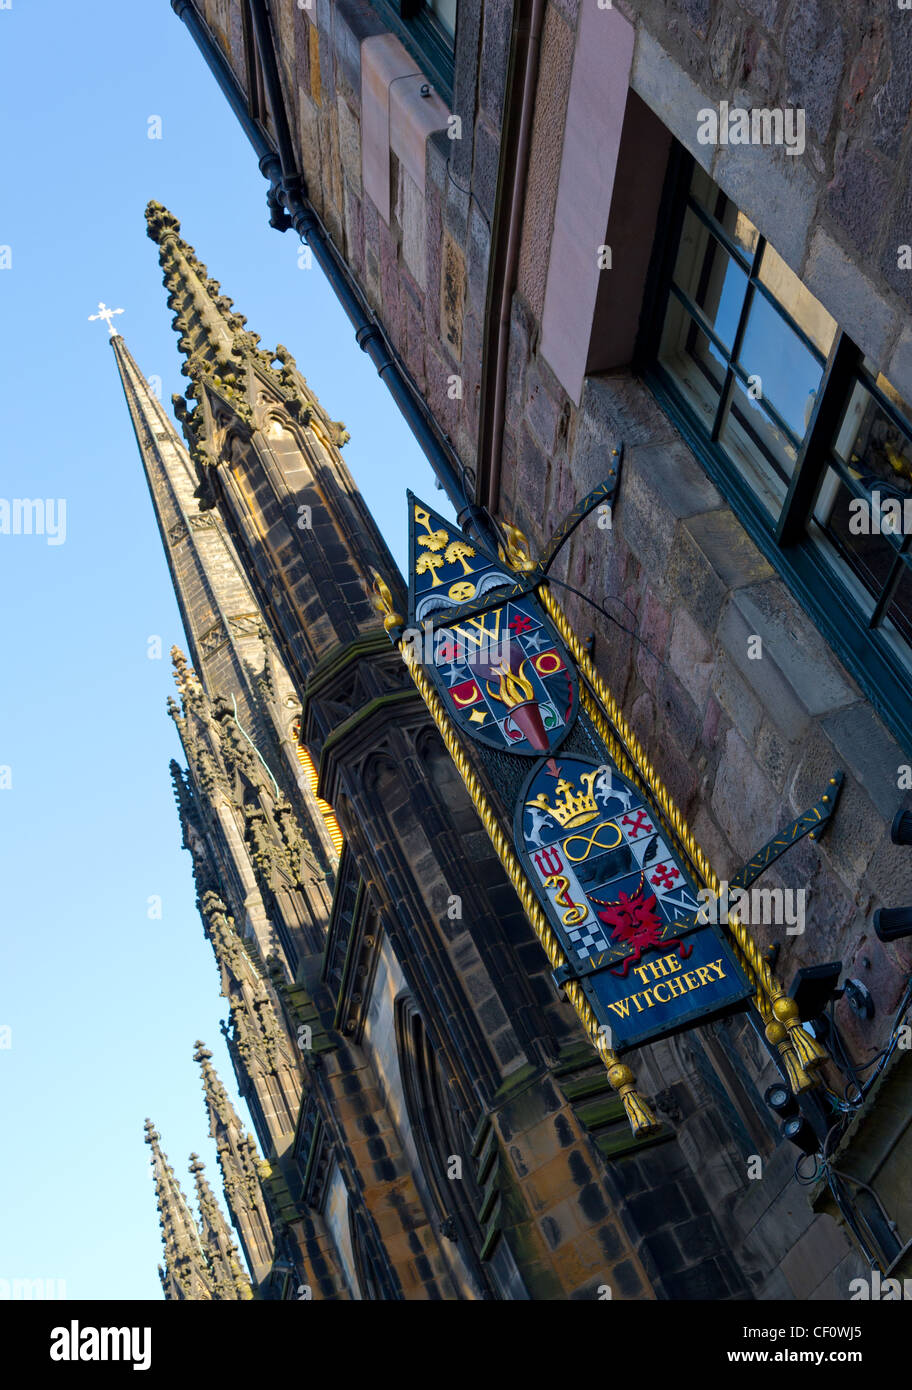 La Witchery por el Castillo de Edimburgo, Escocia, Reino Unido. Foto de stock